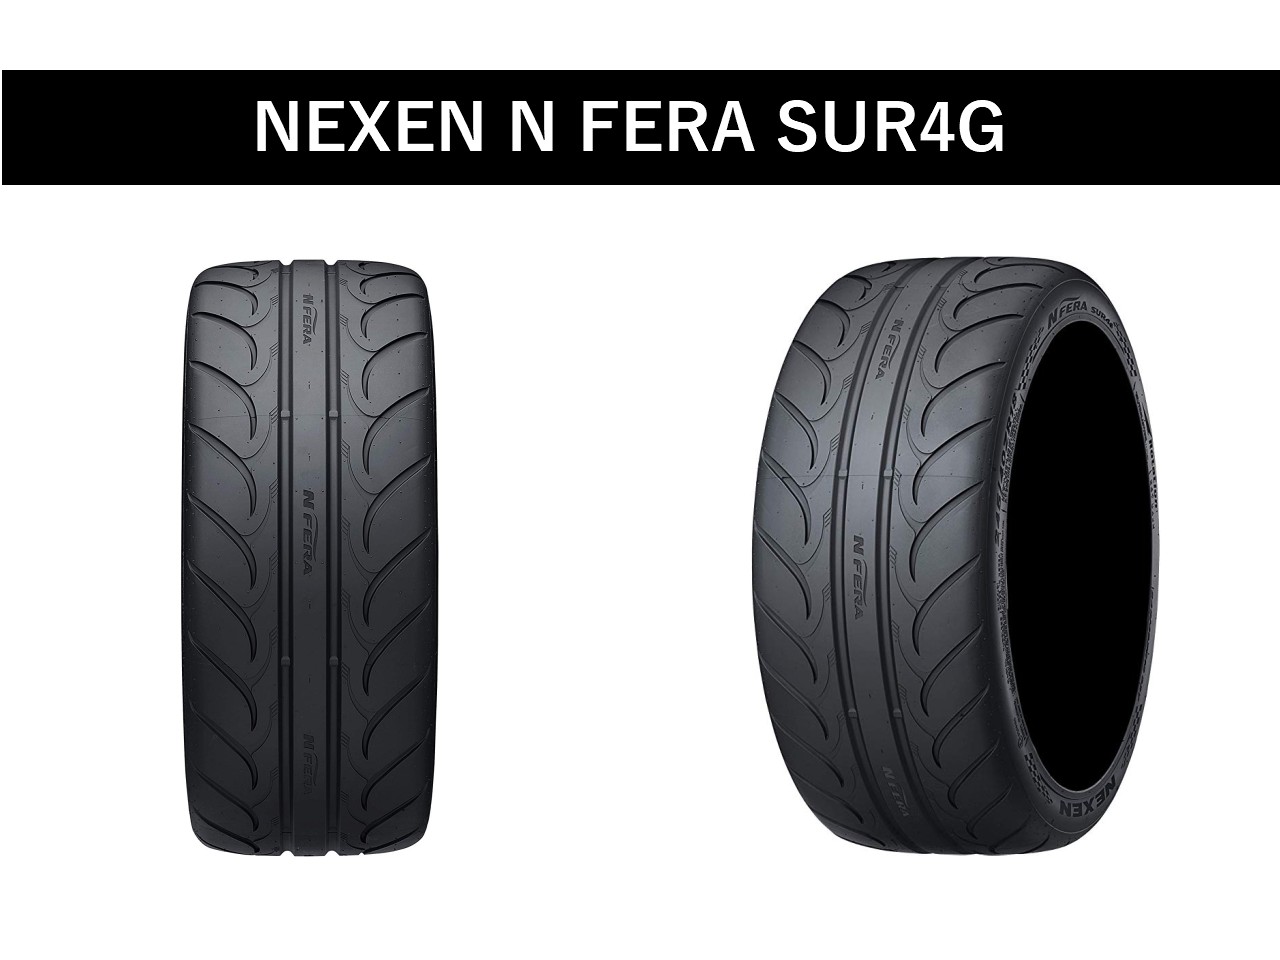 NEXEN（ネクセン） サマータイヤ NFERA SUR4G 205 55ZR16 91W 15718NX - 5